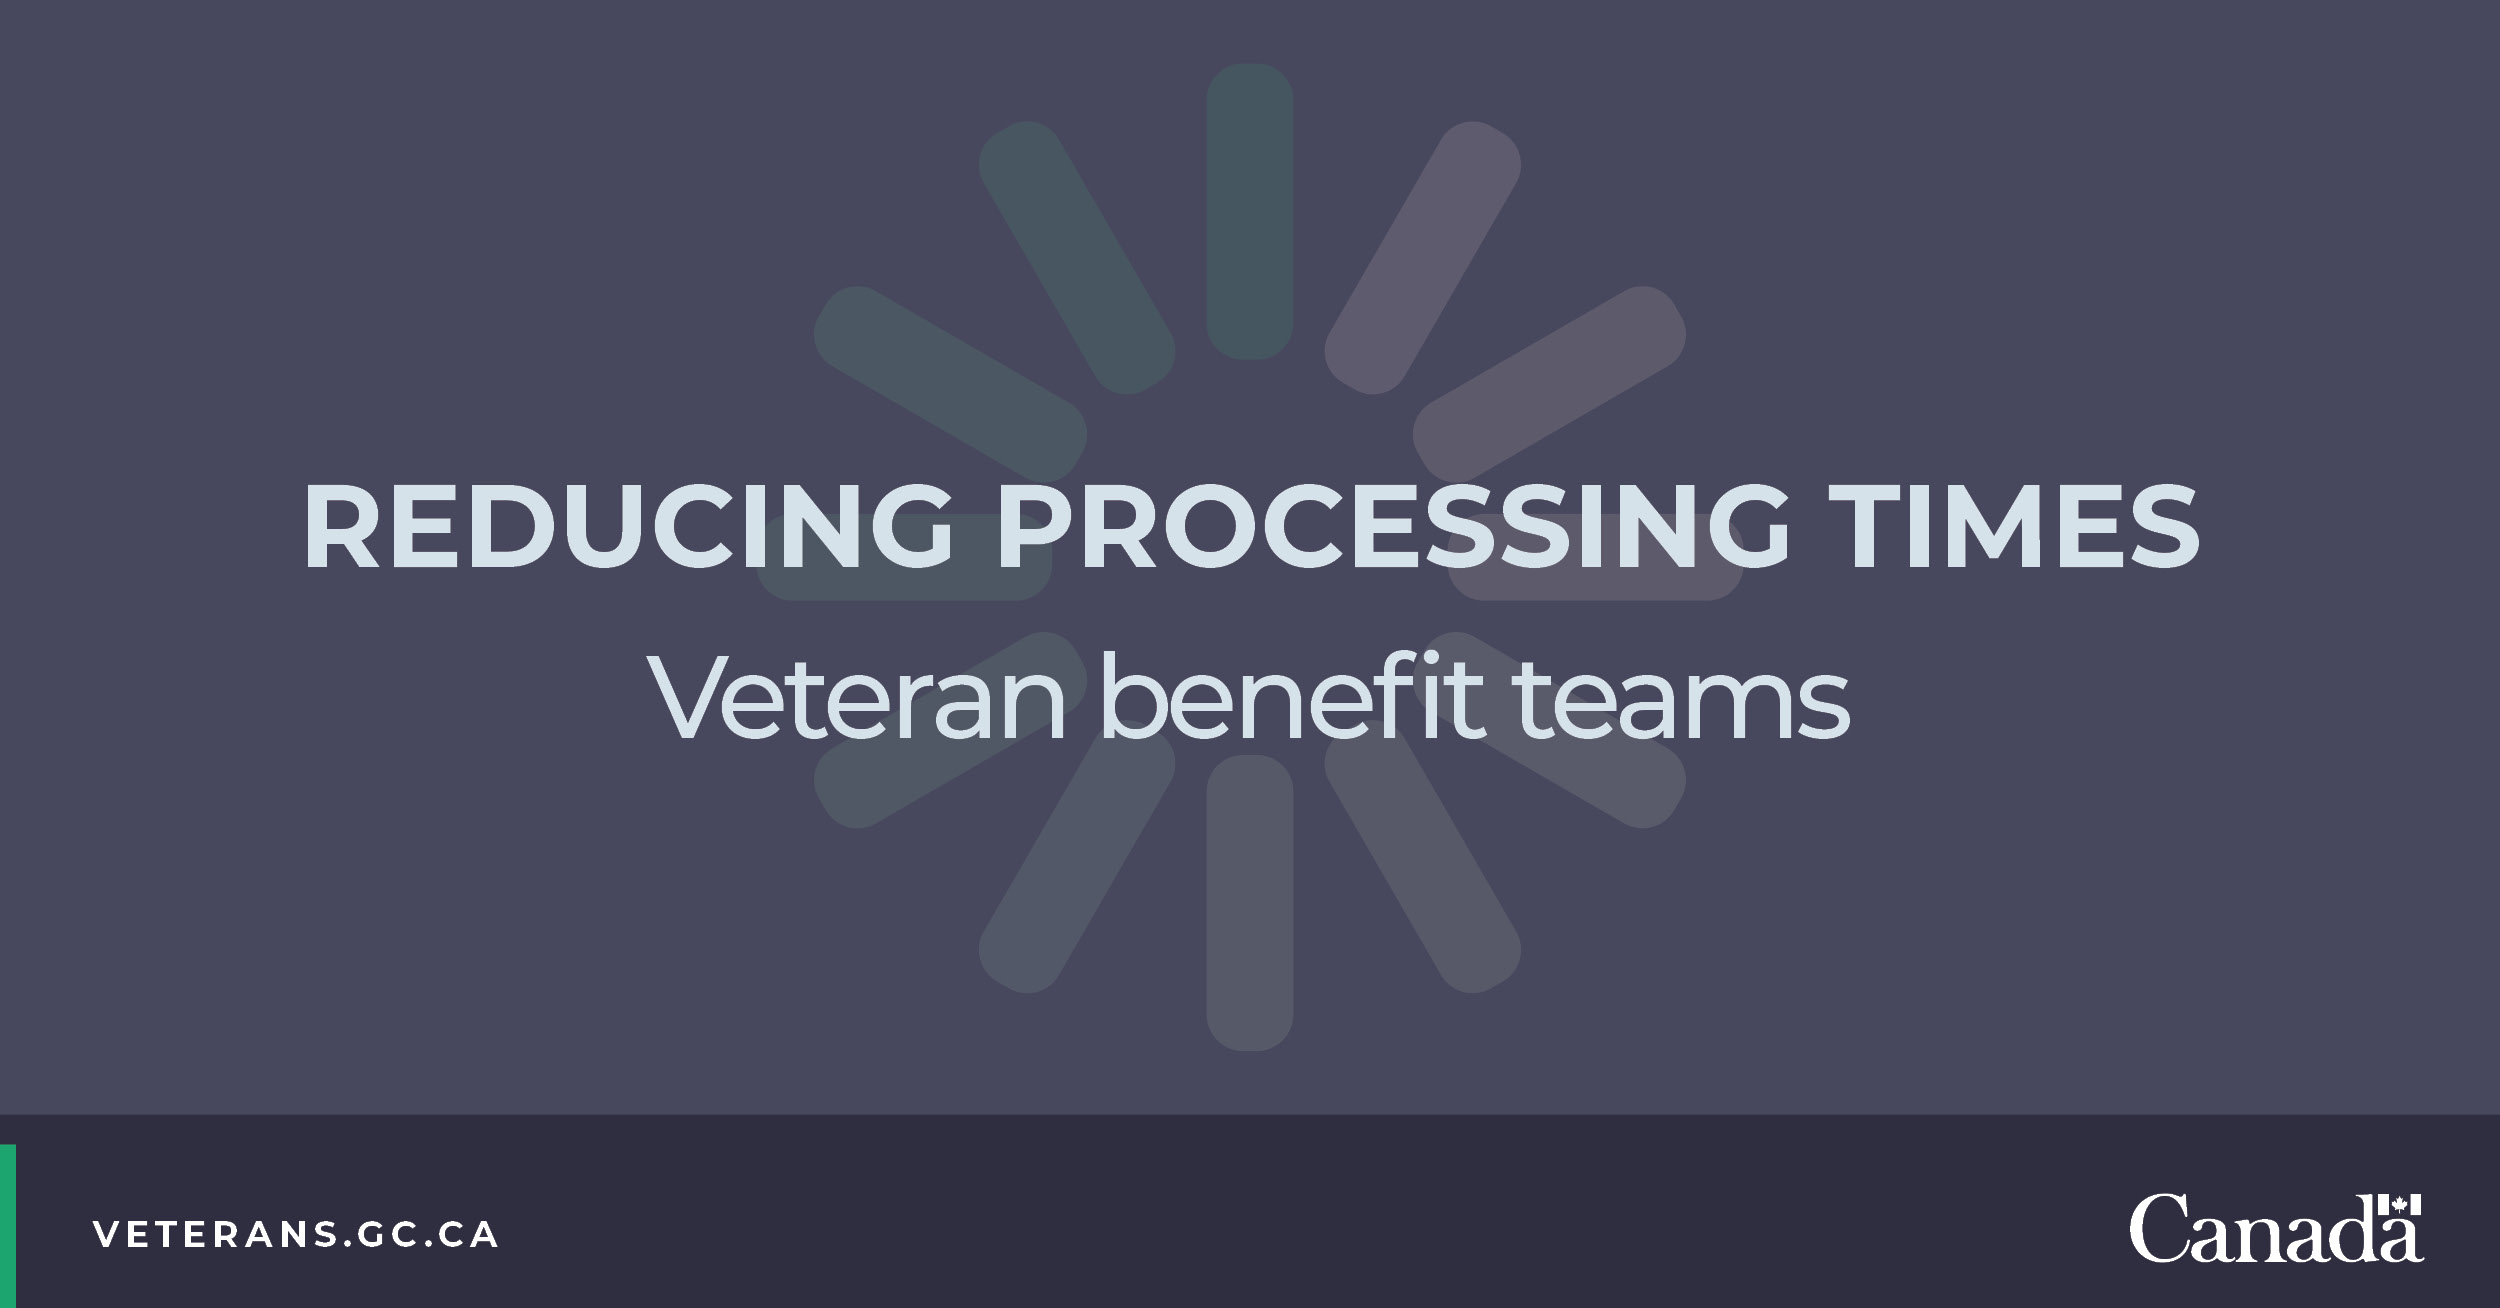 Improving Wait Times - Veterans Benefits Teams